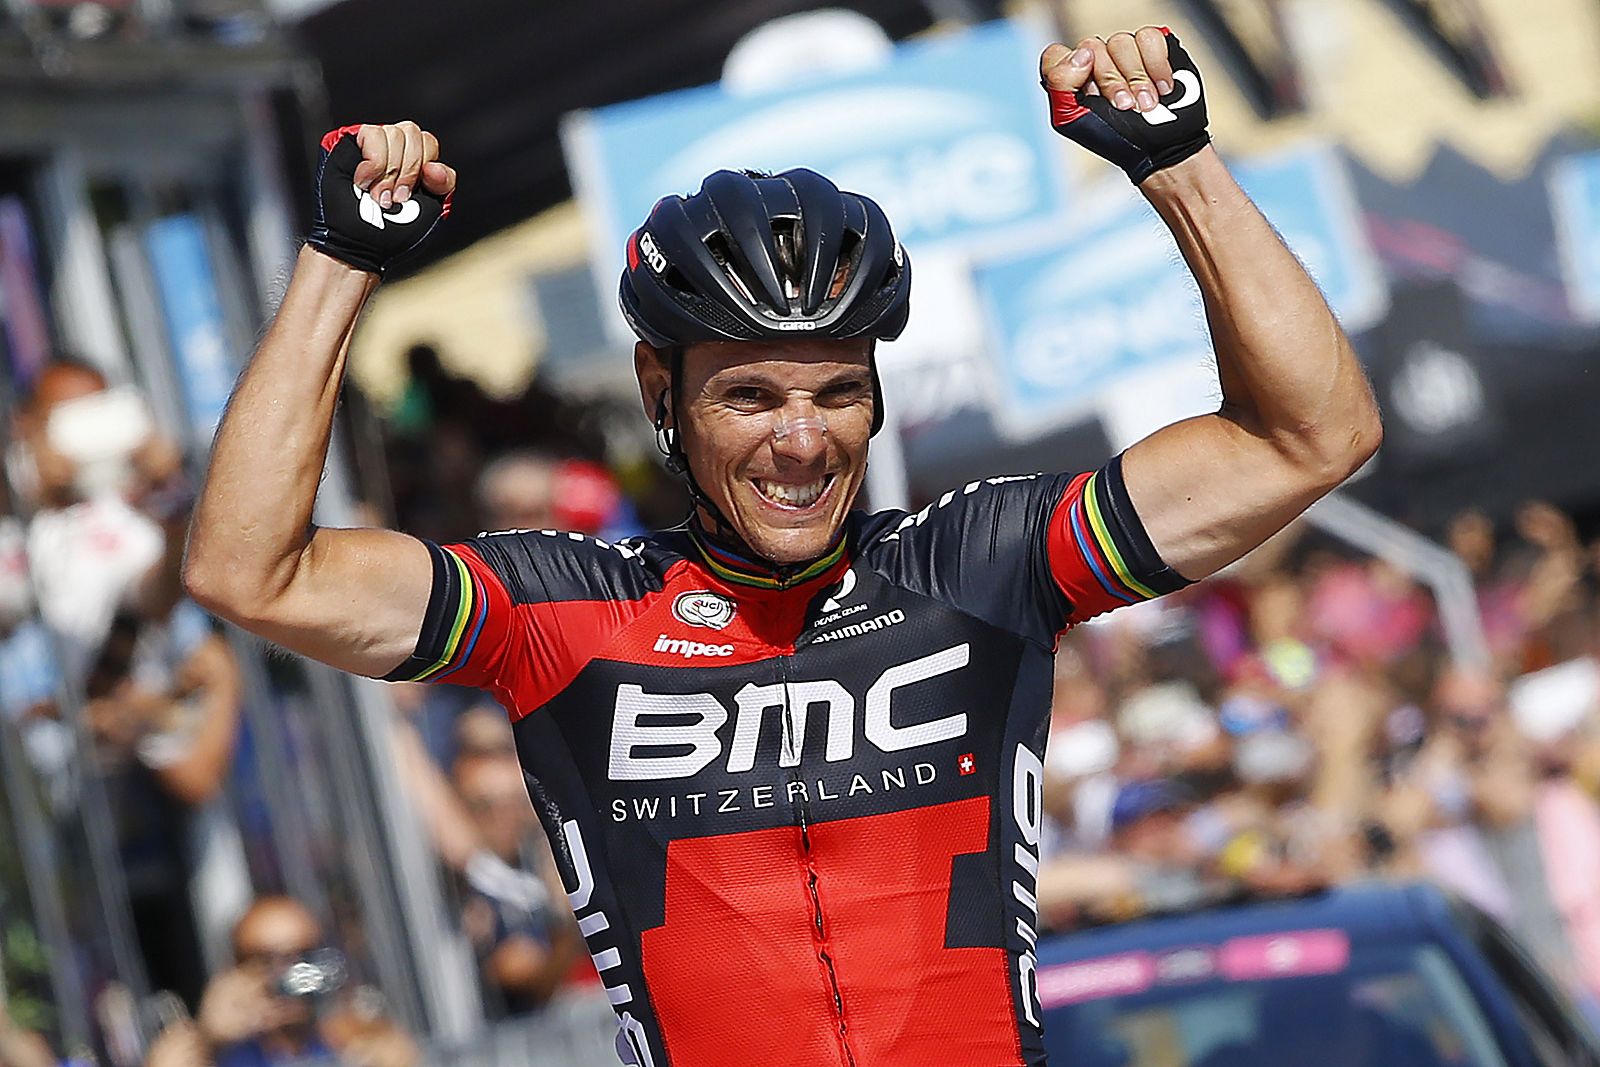 Philippe Gilbert se ha apuntado su segunda victoria en este Giro 2015.